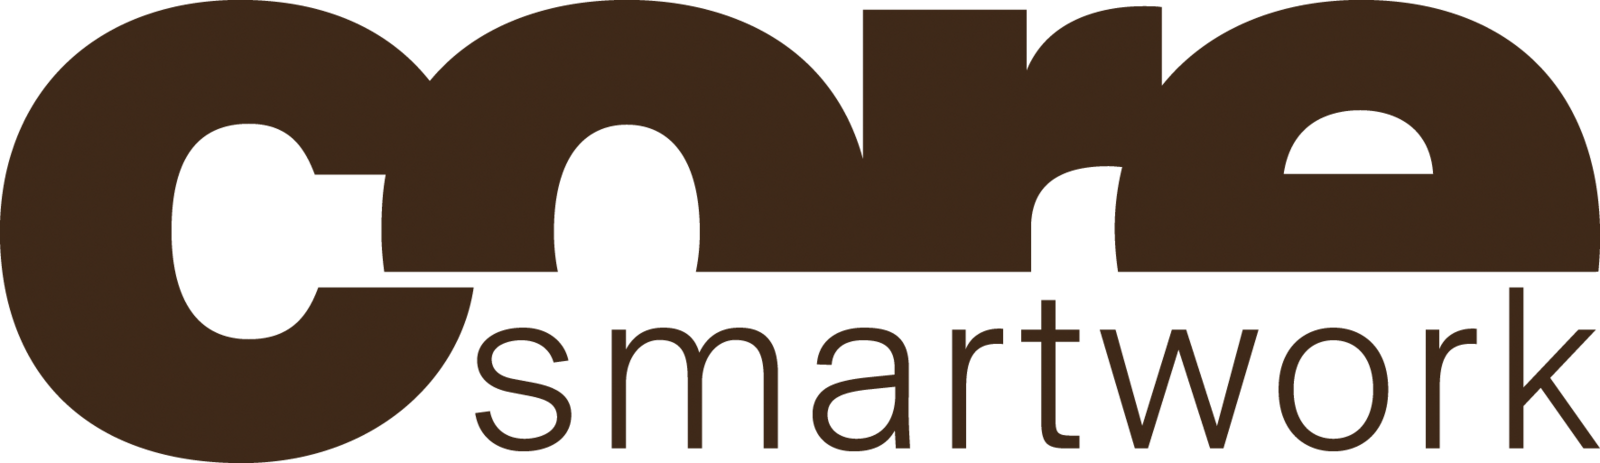 core smartwork logo